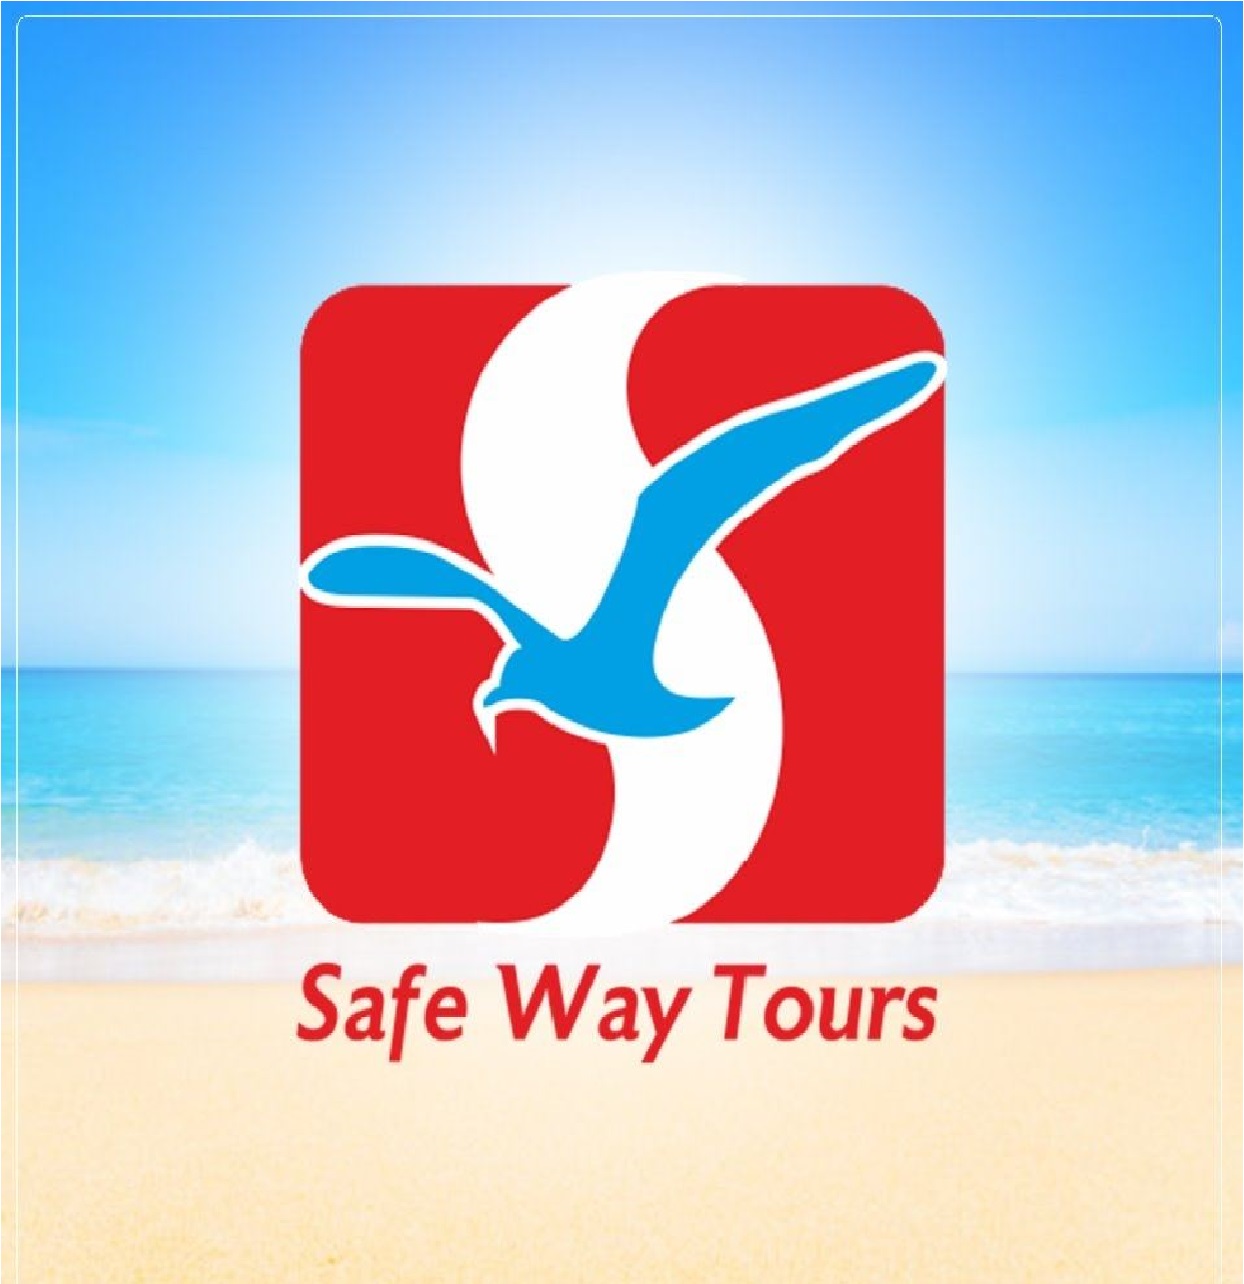 Safeway tours